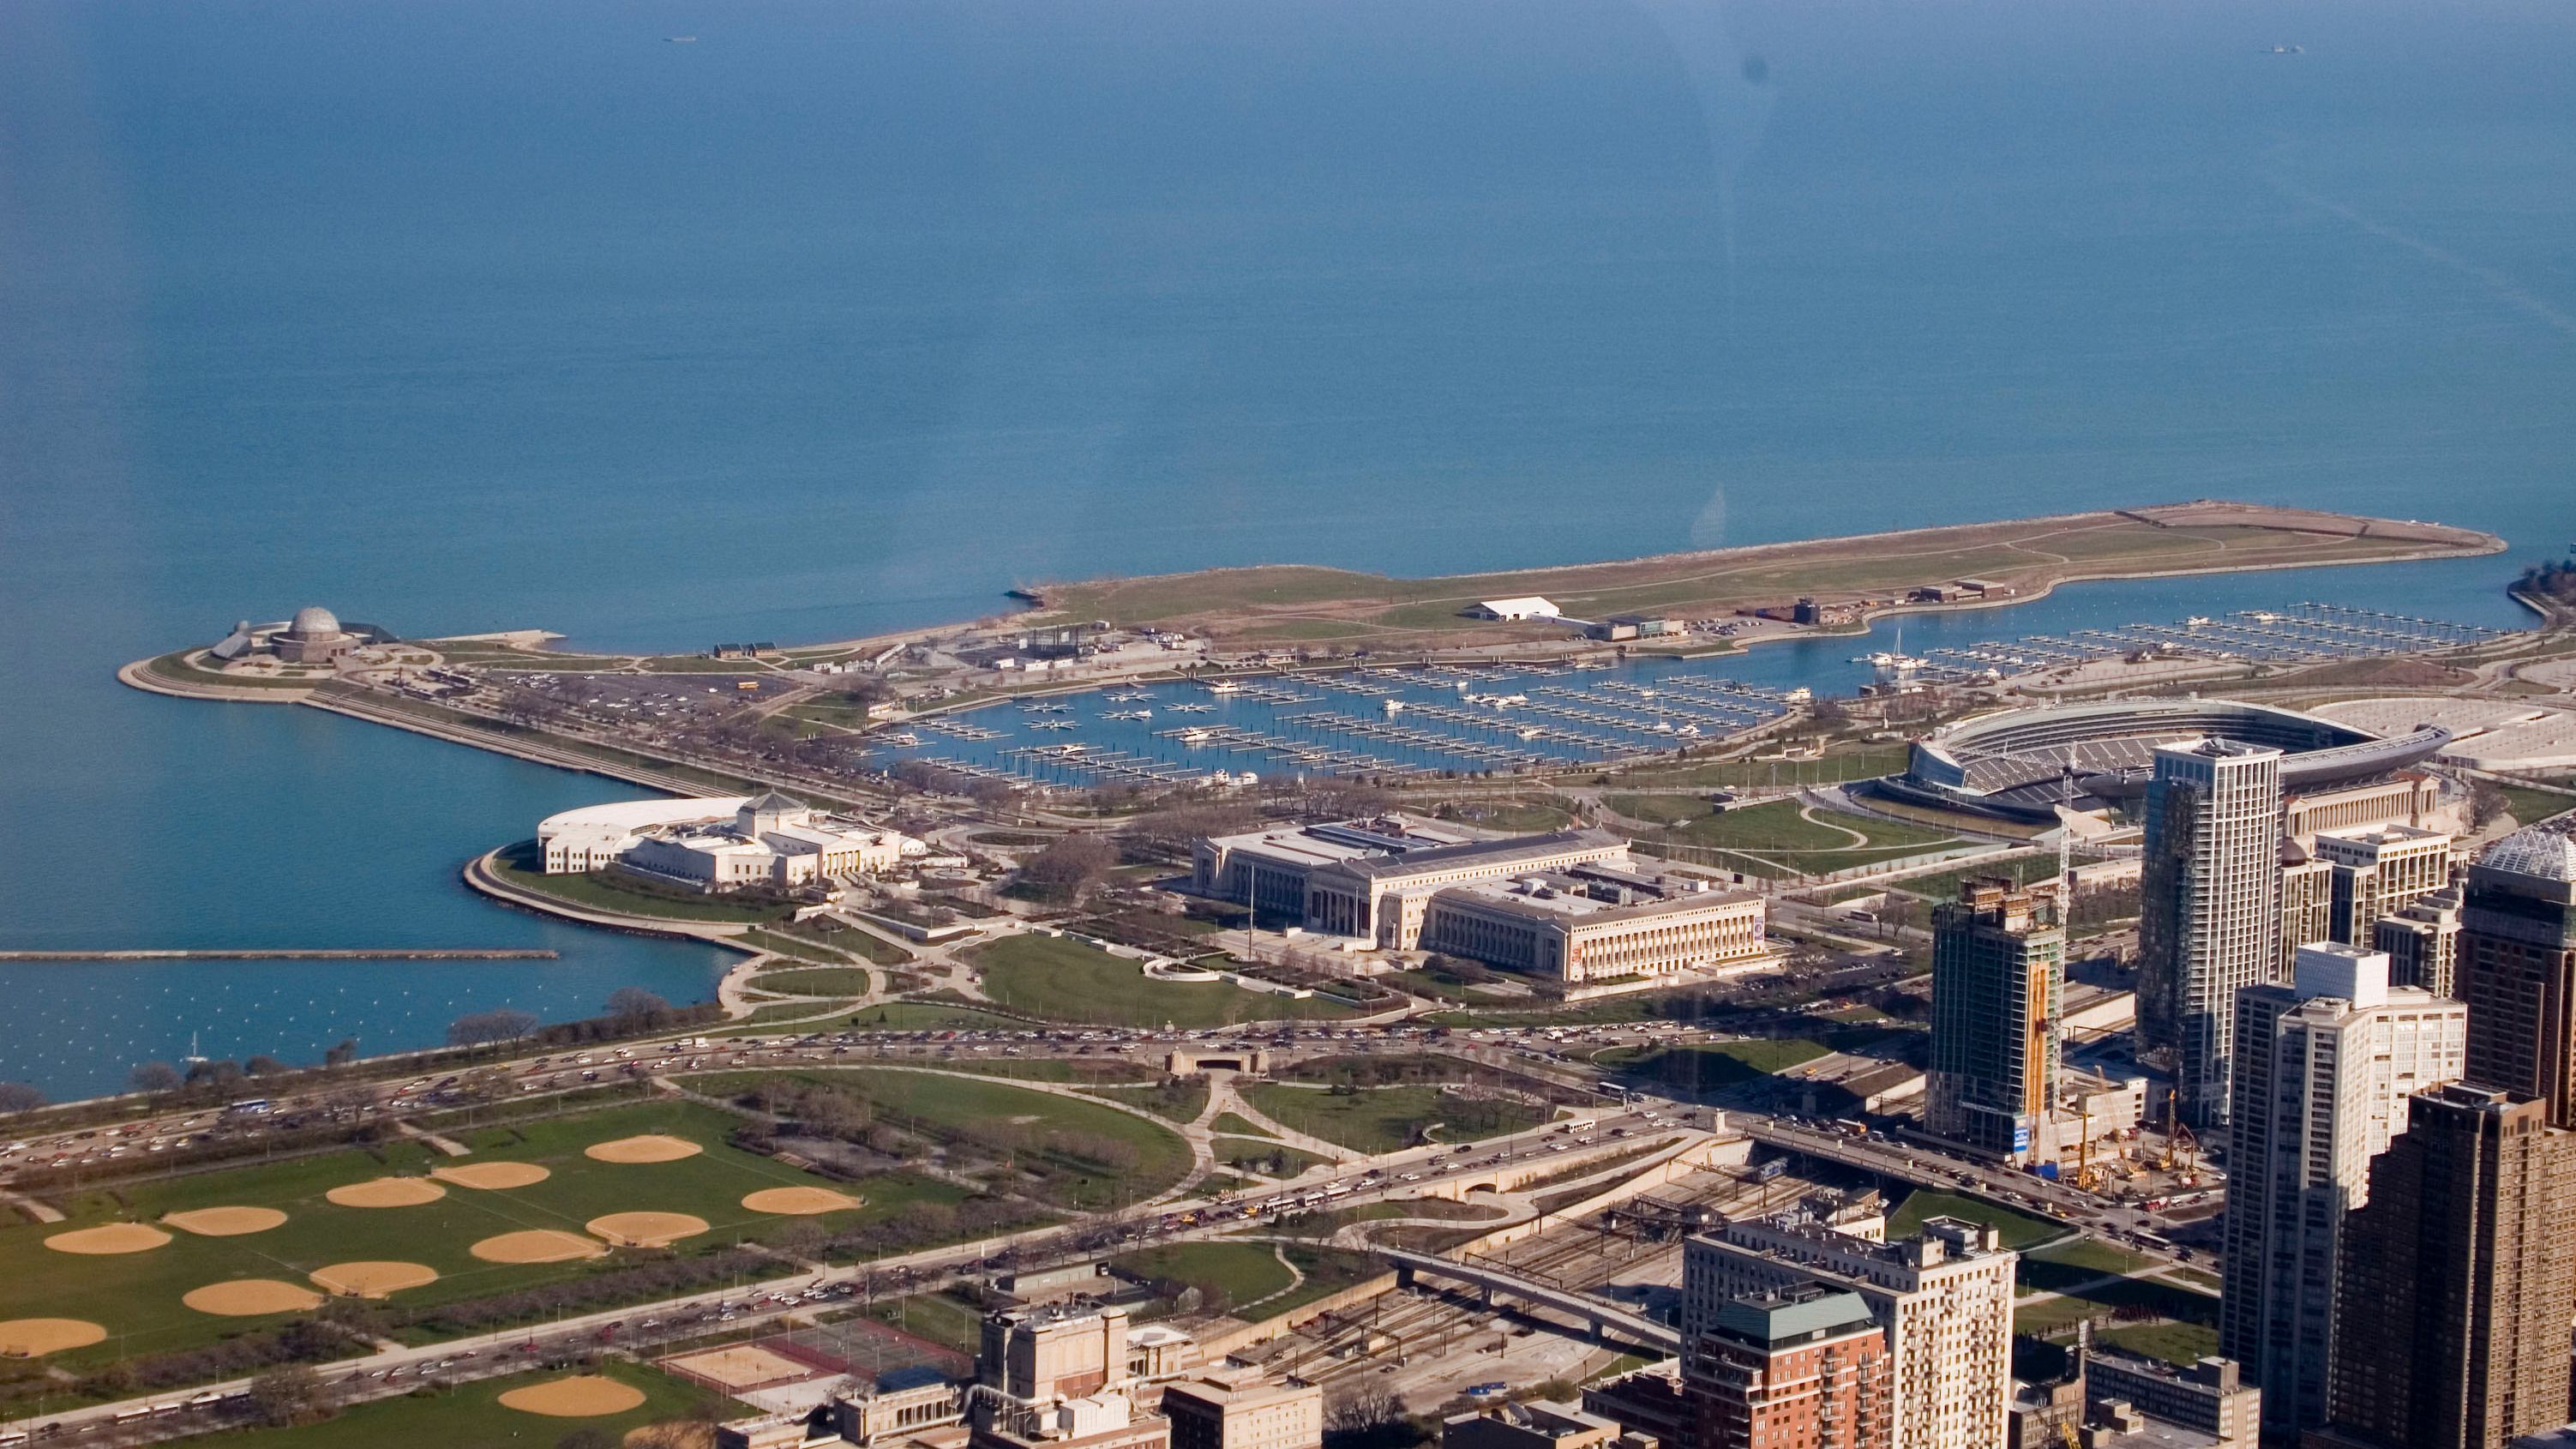 Meigs Field in Chicago